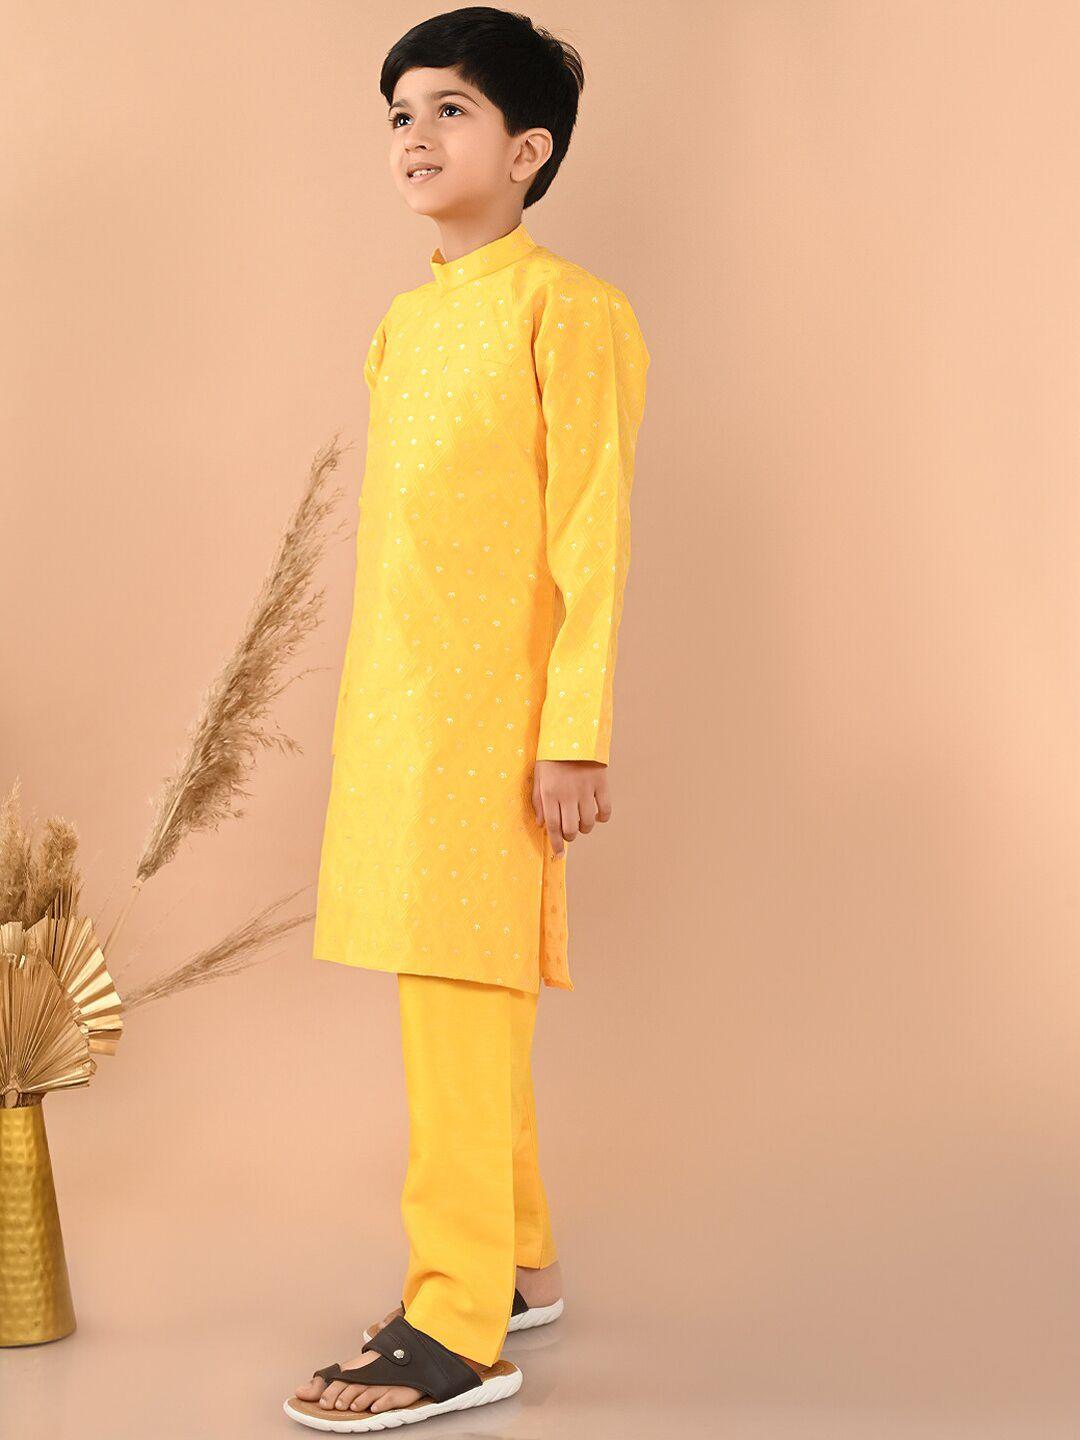 lilpicks boys ethnic motifs woven design band collar long sleeve kurta set